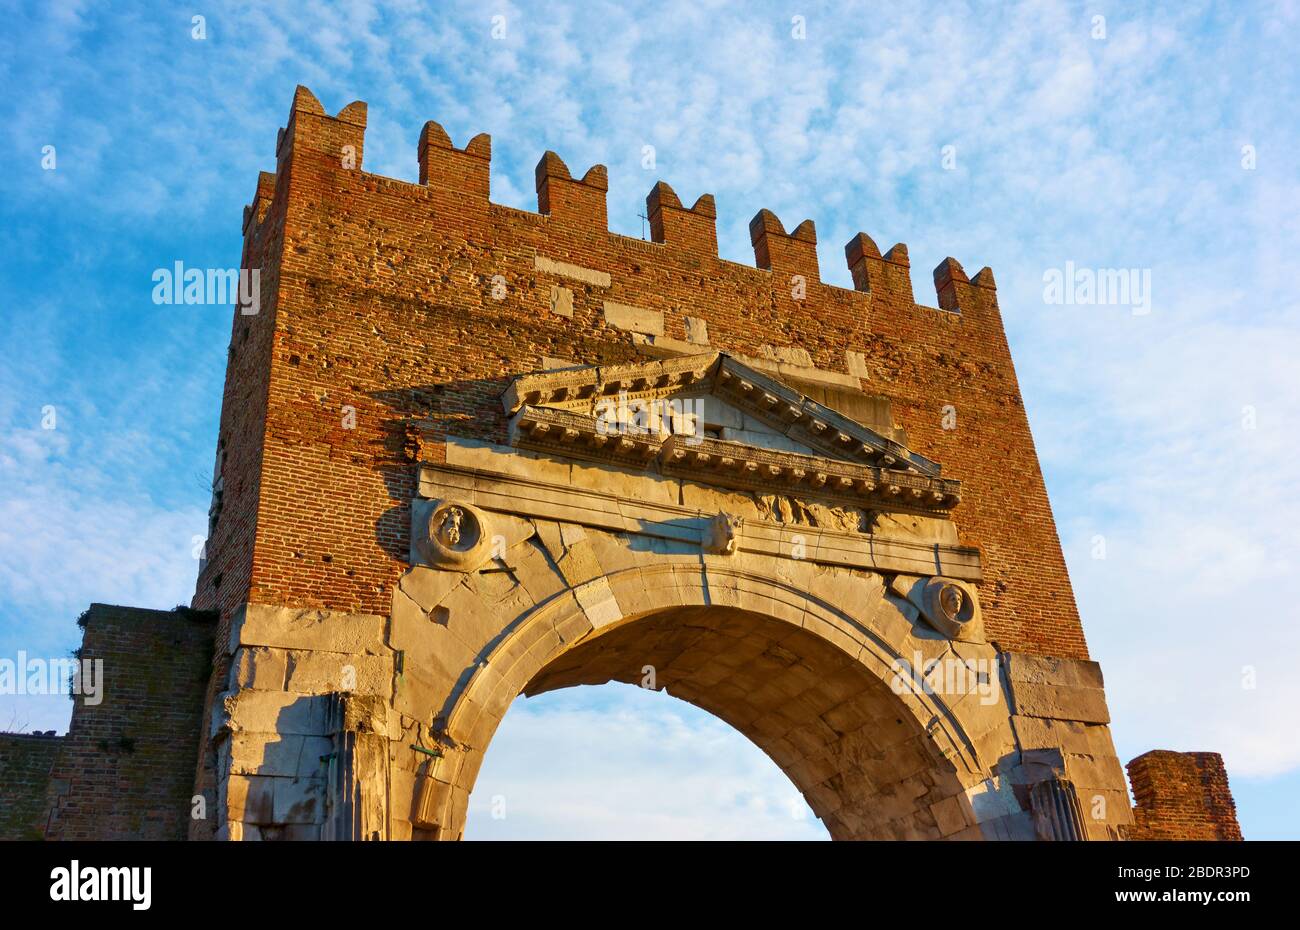 Arch of Augustus - Ancient roman gate in Rimini, Italy Stock Photo